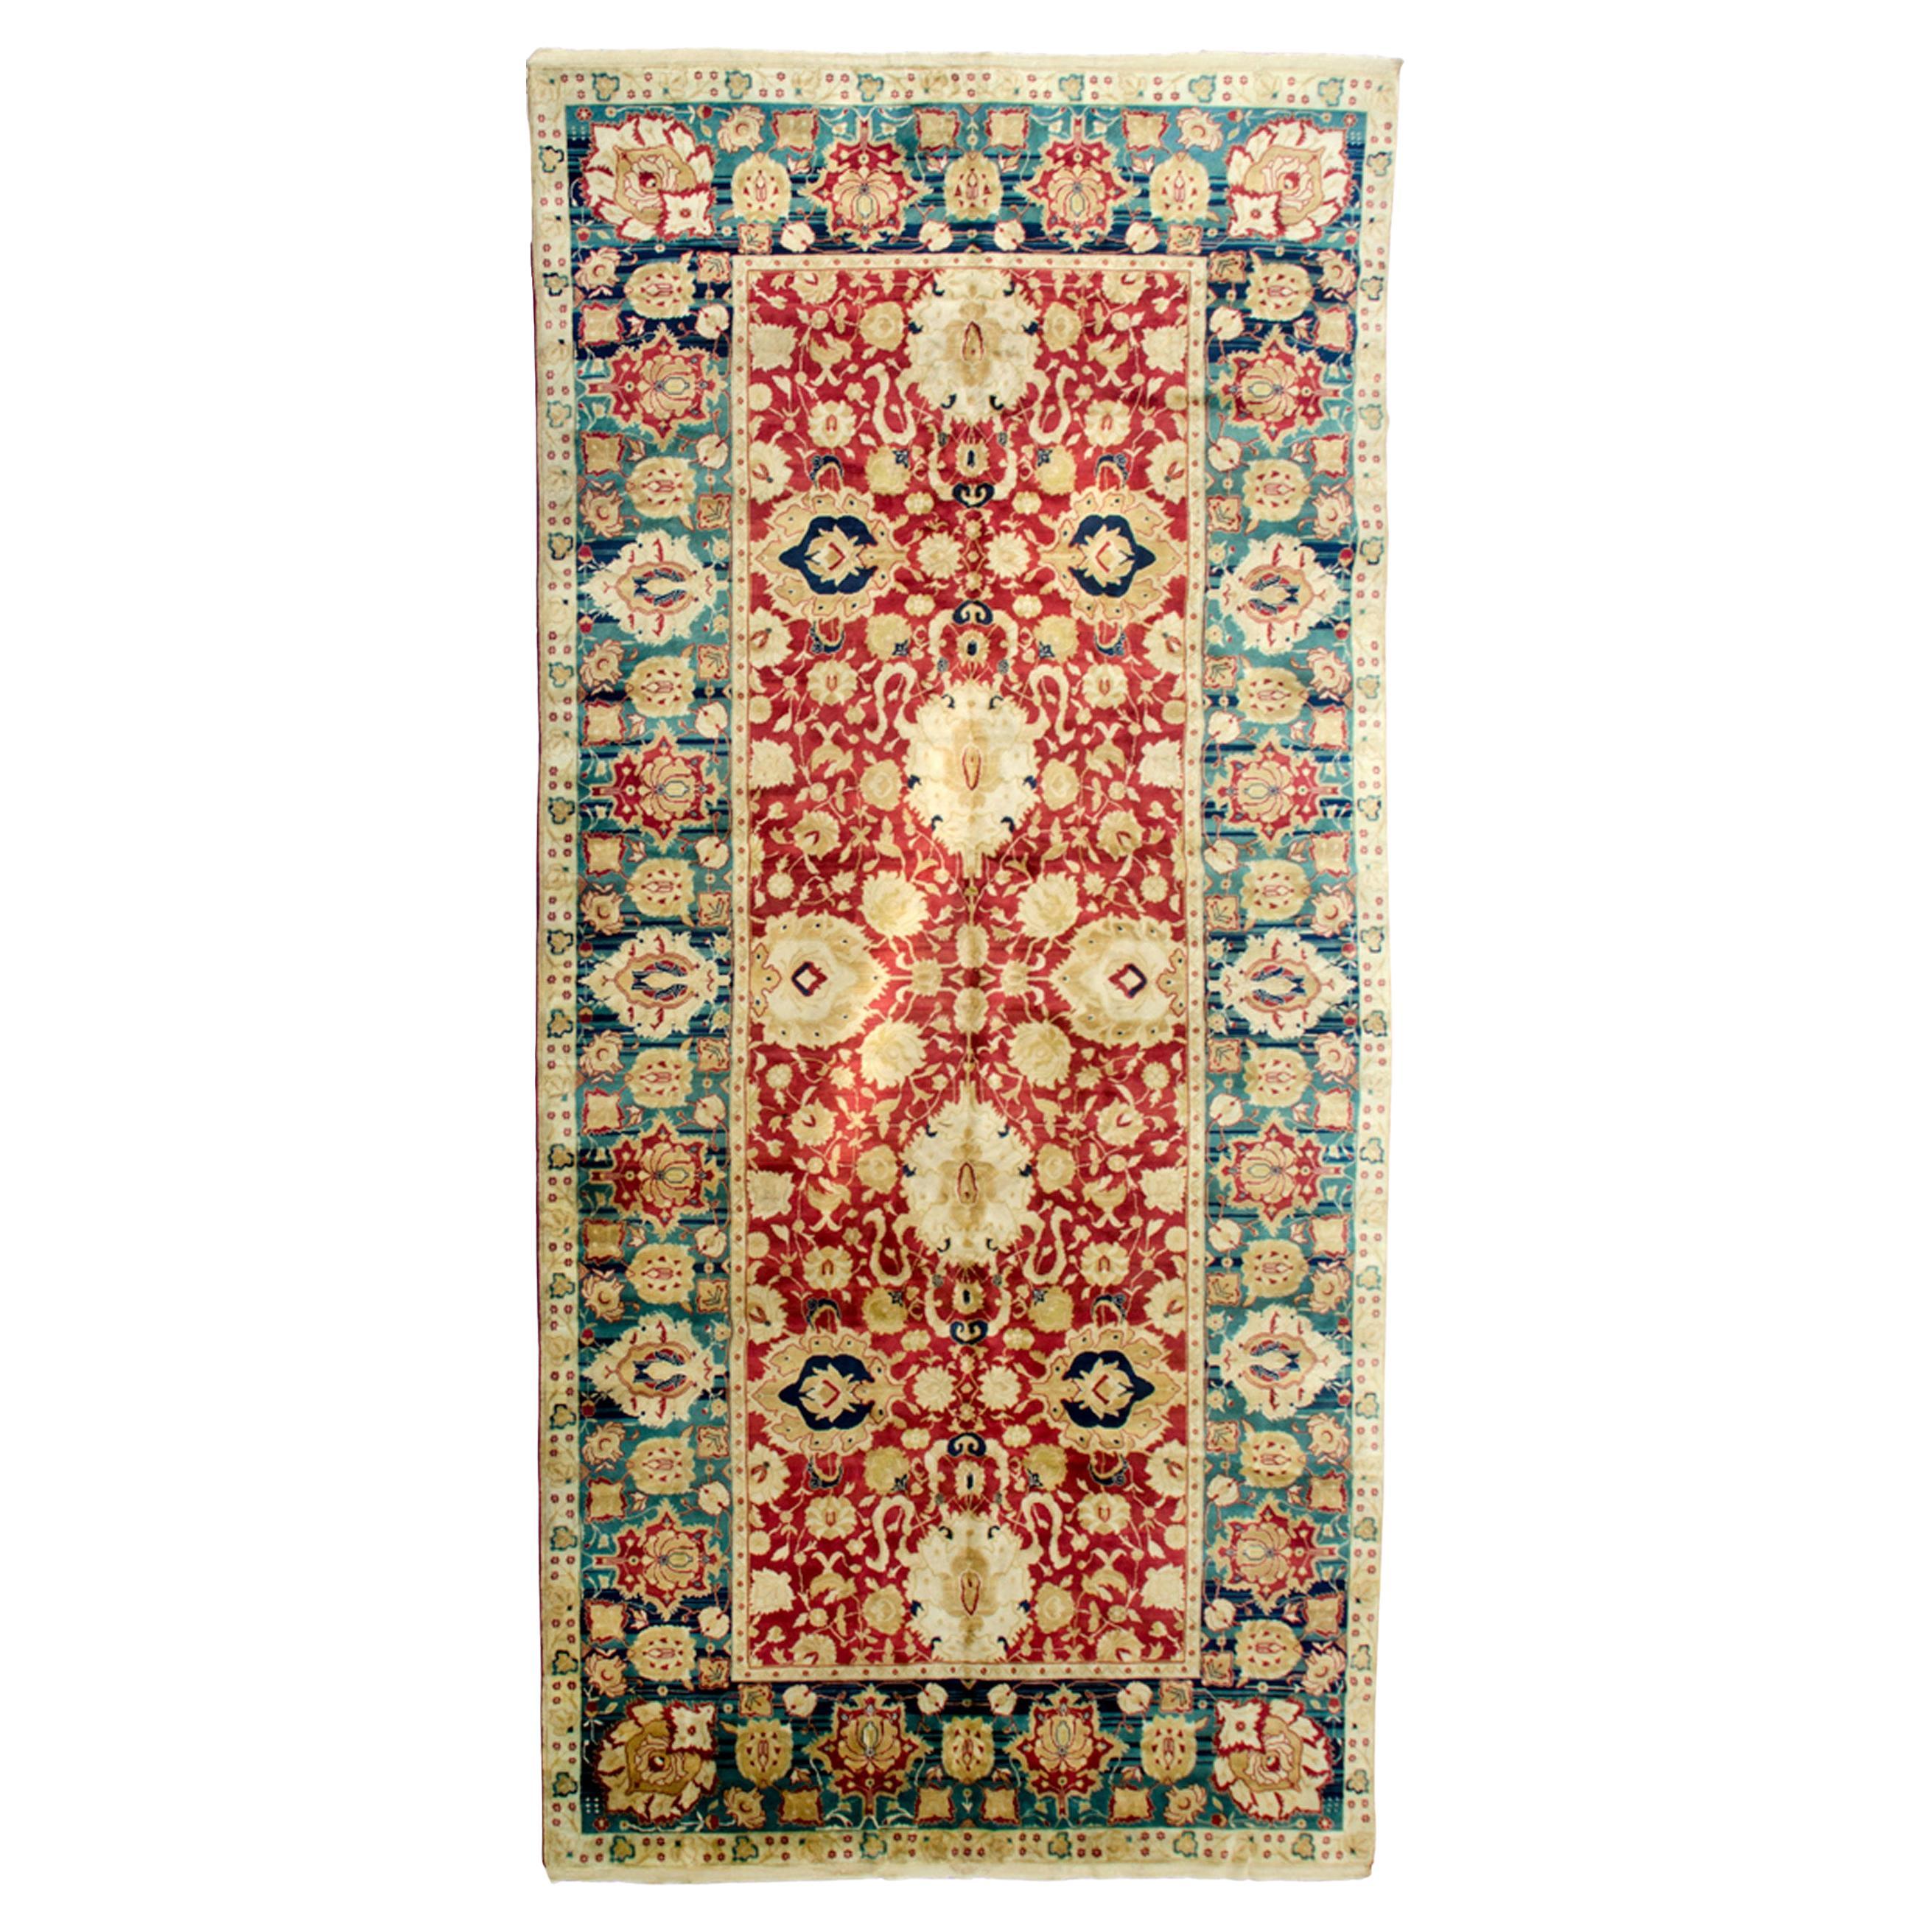 Vintage Agra Carpet, India